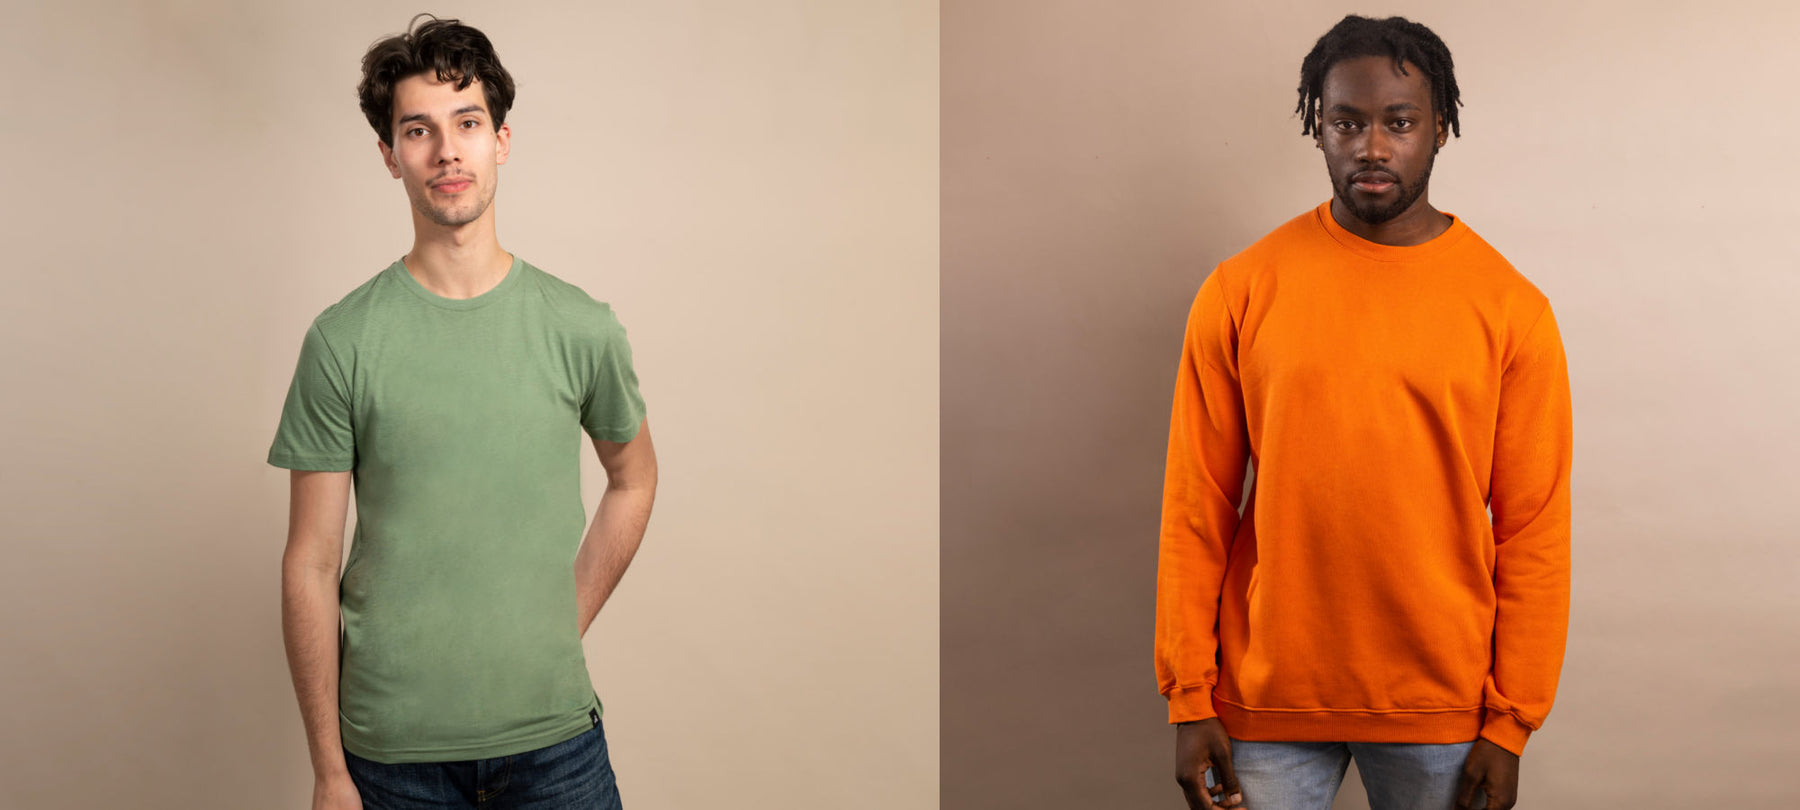 Shop Refibra Clothing Online | Best t-shirts for men & women